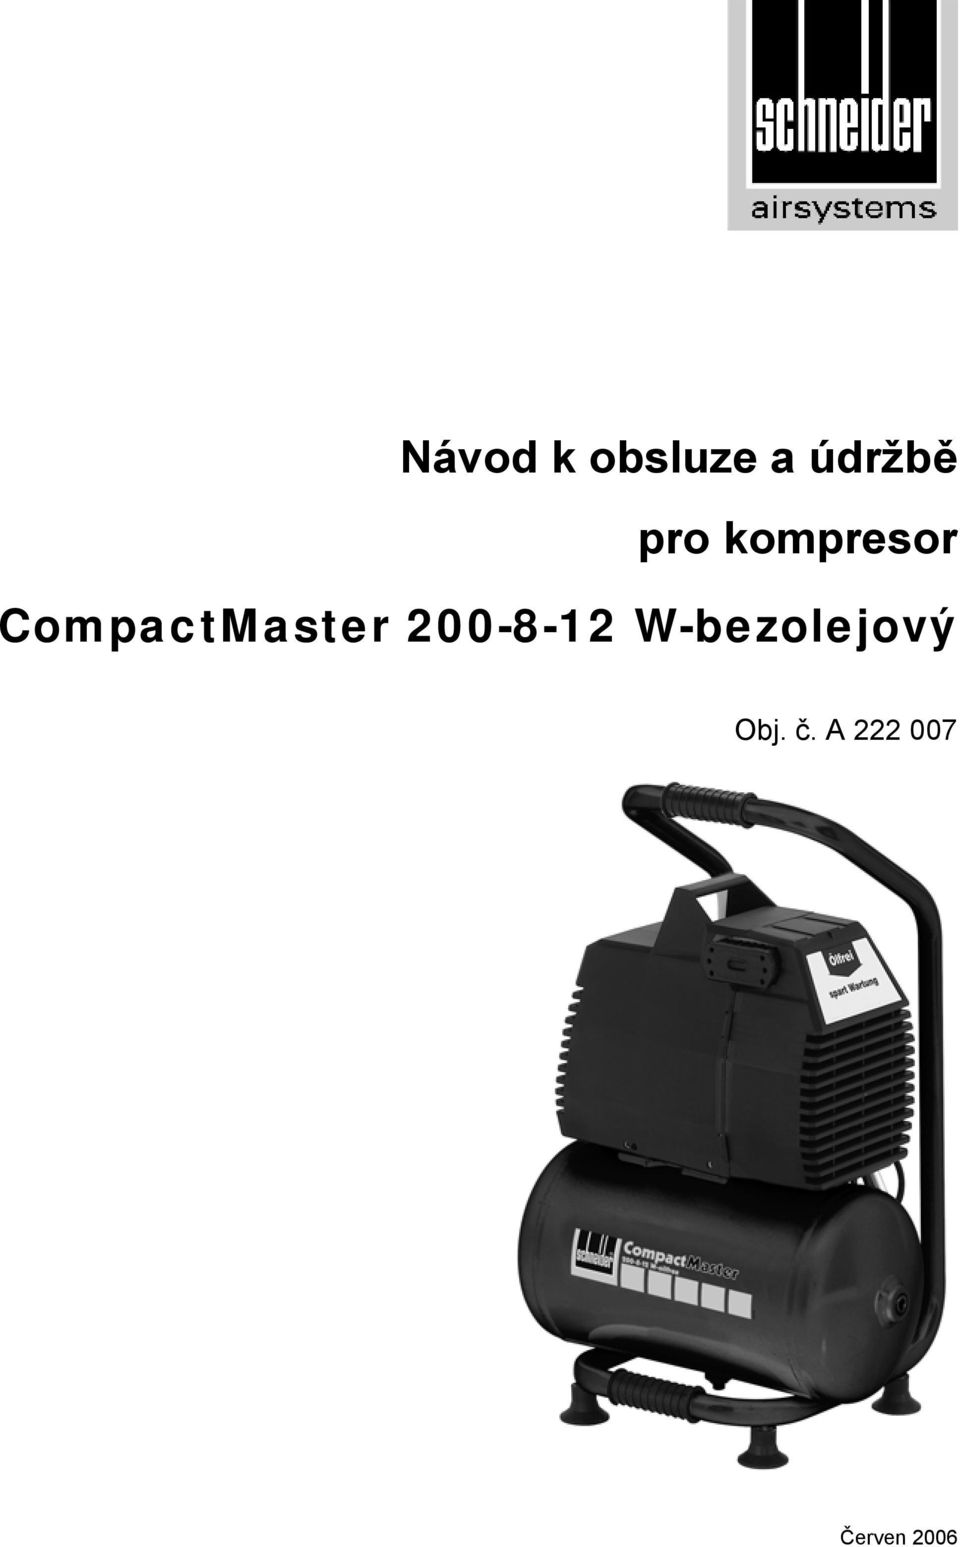 CompactMaster 200-8-12